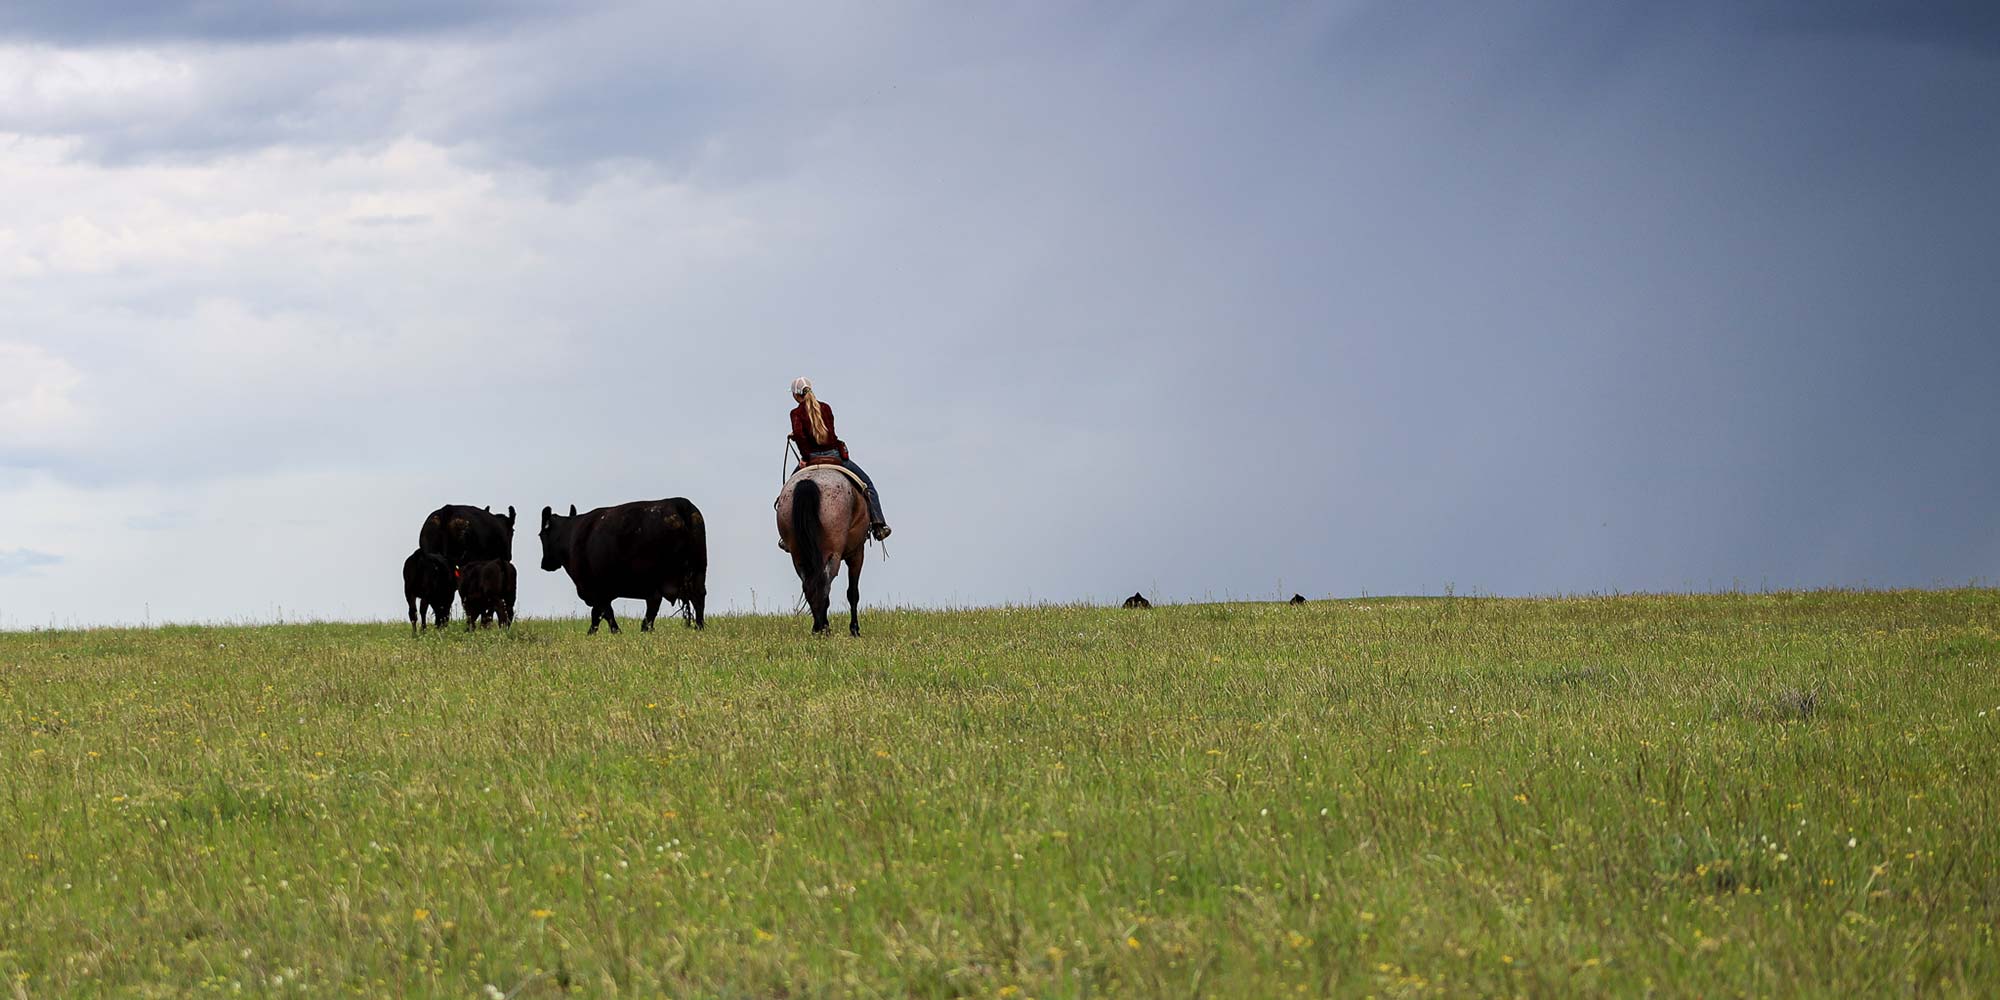 Cows in pasture, Callie on horseback